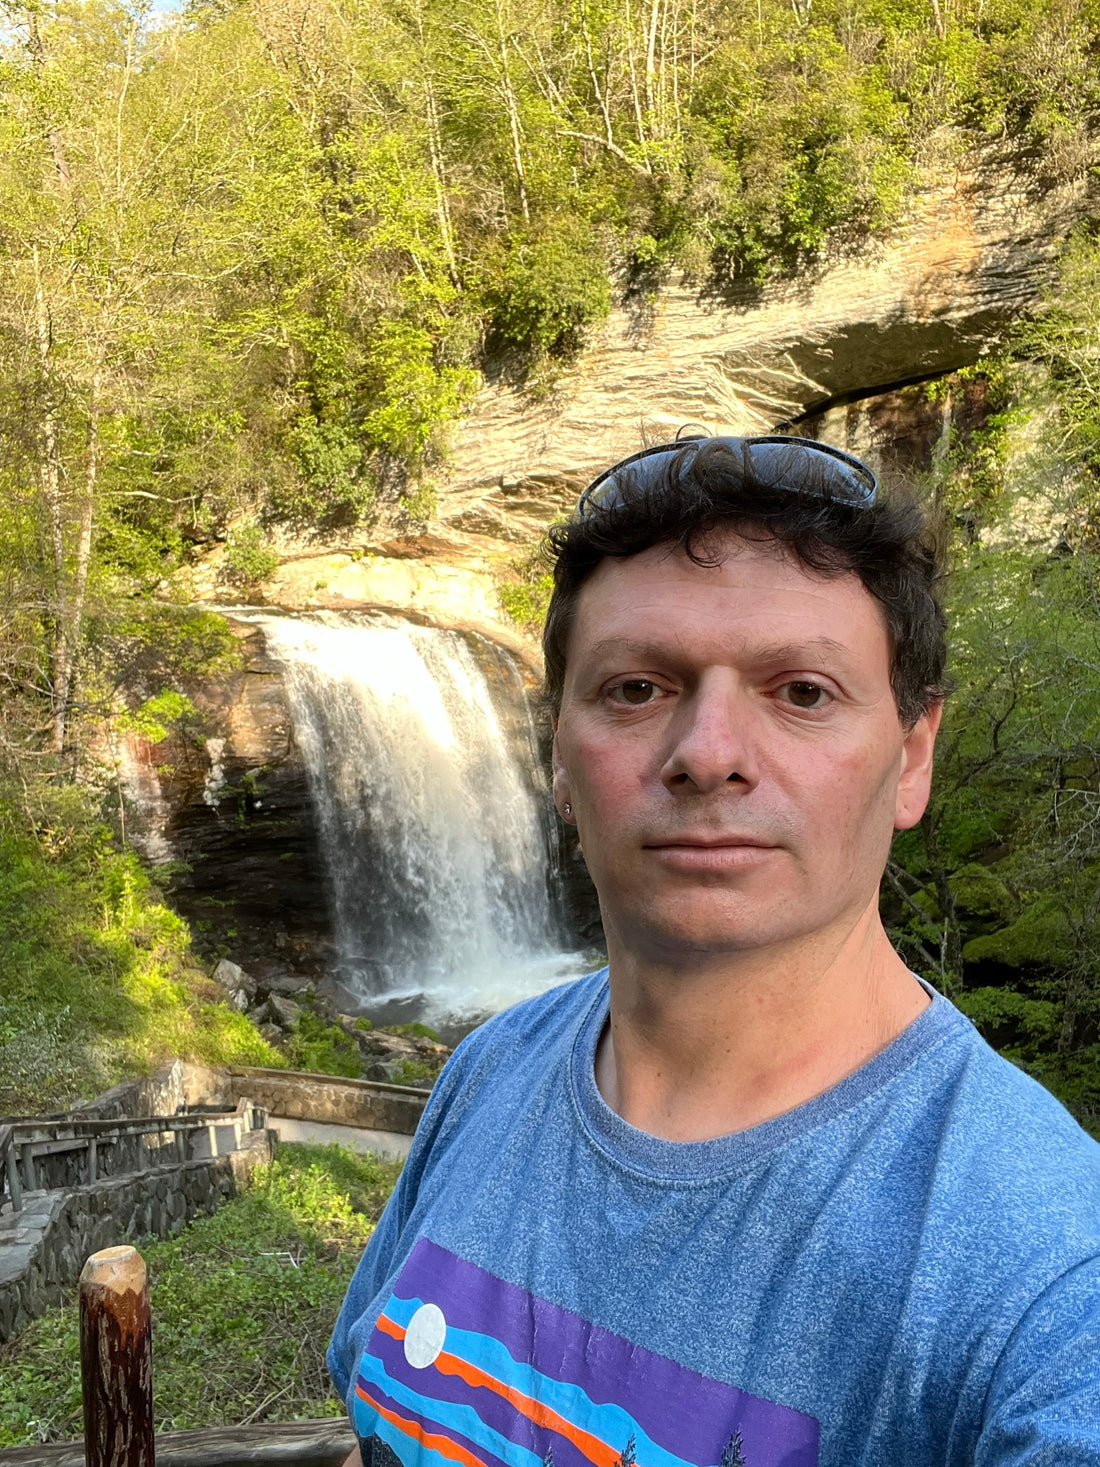 Looking Glass Falls Waterfall in the Appalachian Mountains